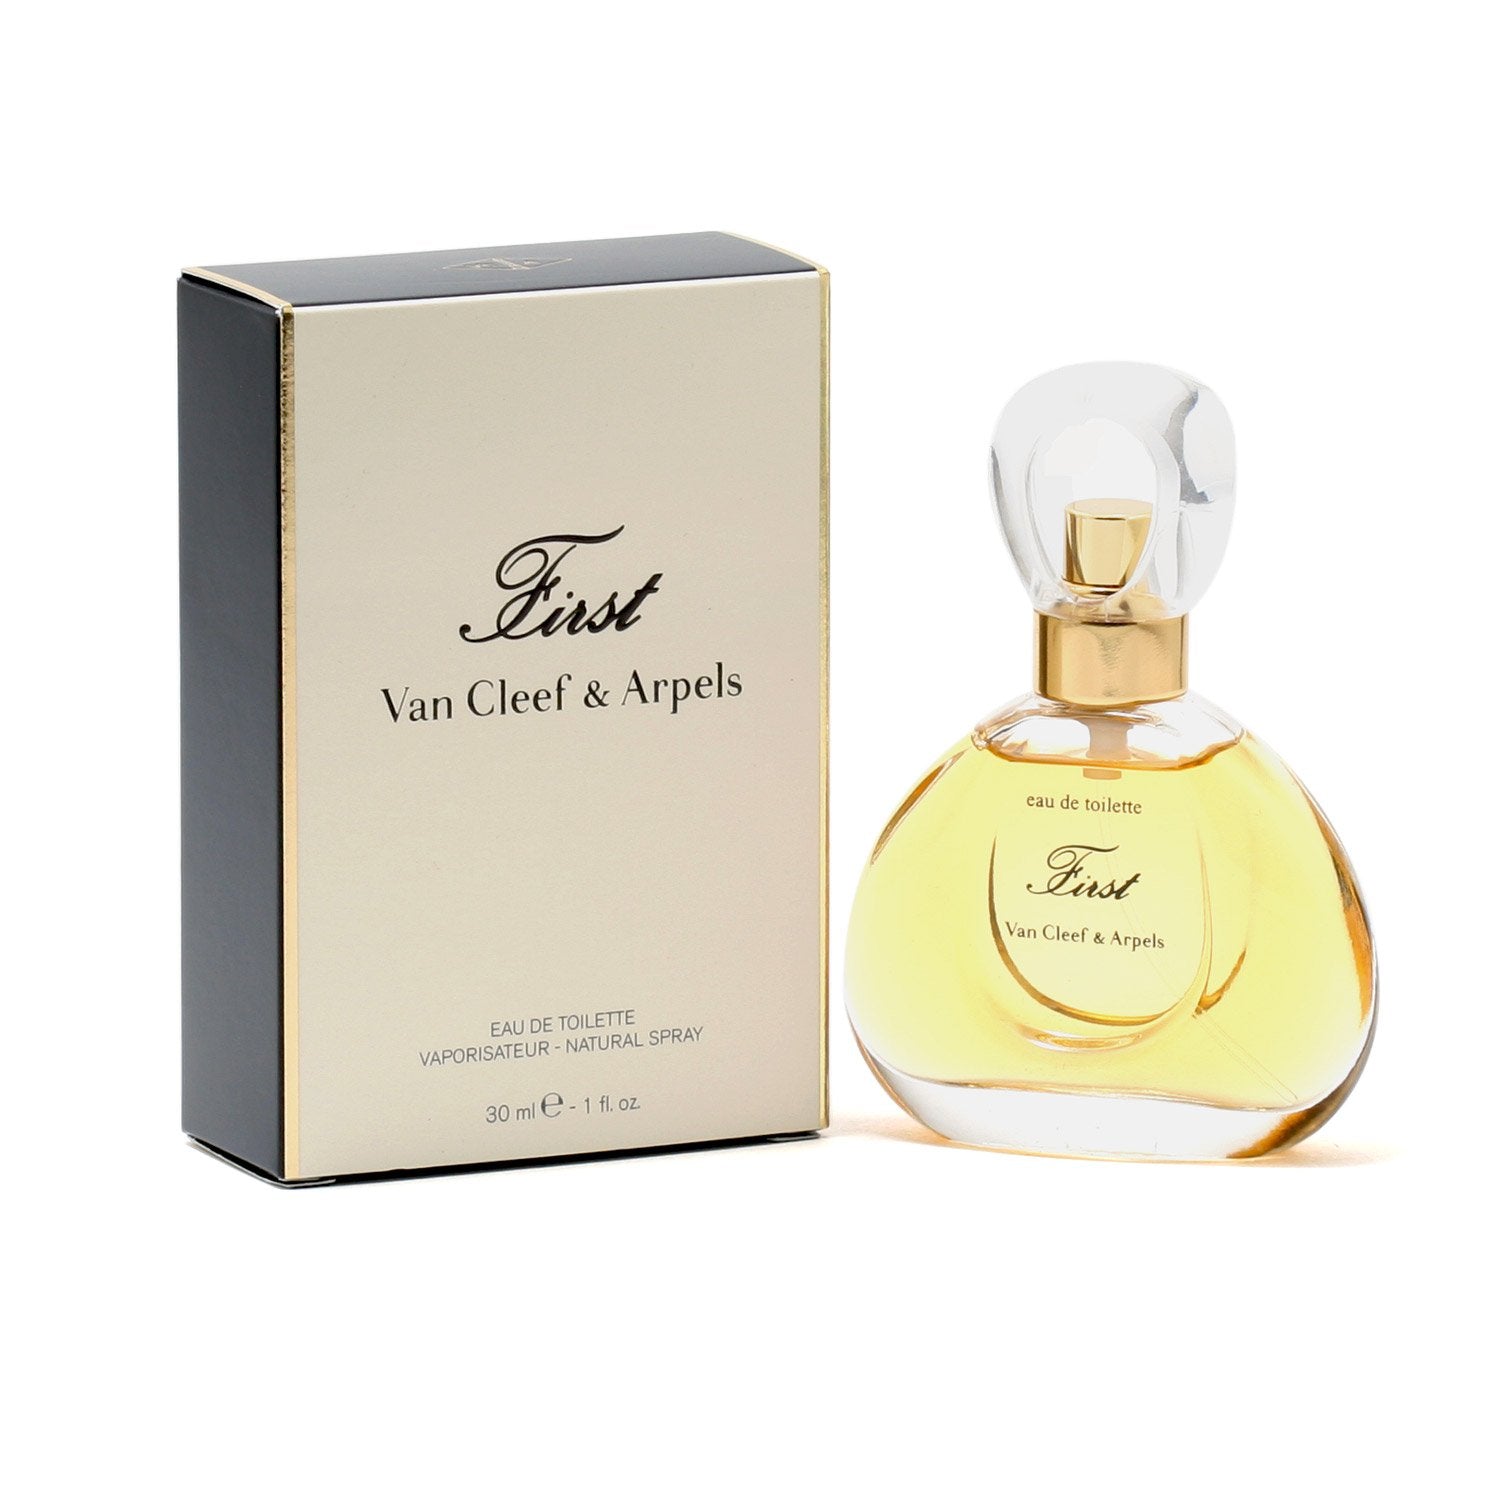 Perfume - FIRST FOR WOMEN BY VAN CLEEF & ARPELS - EAU DE TOILETTE SPRAY